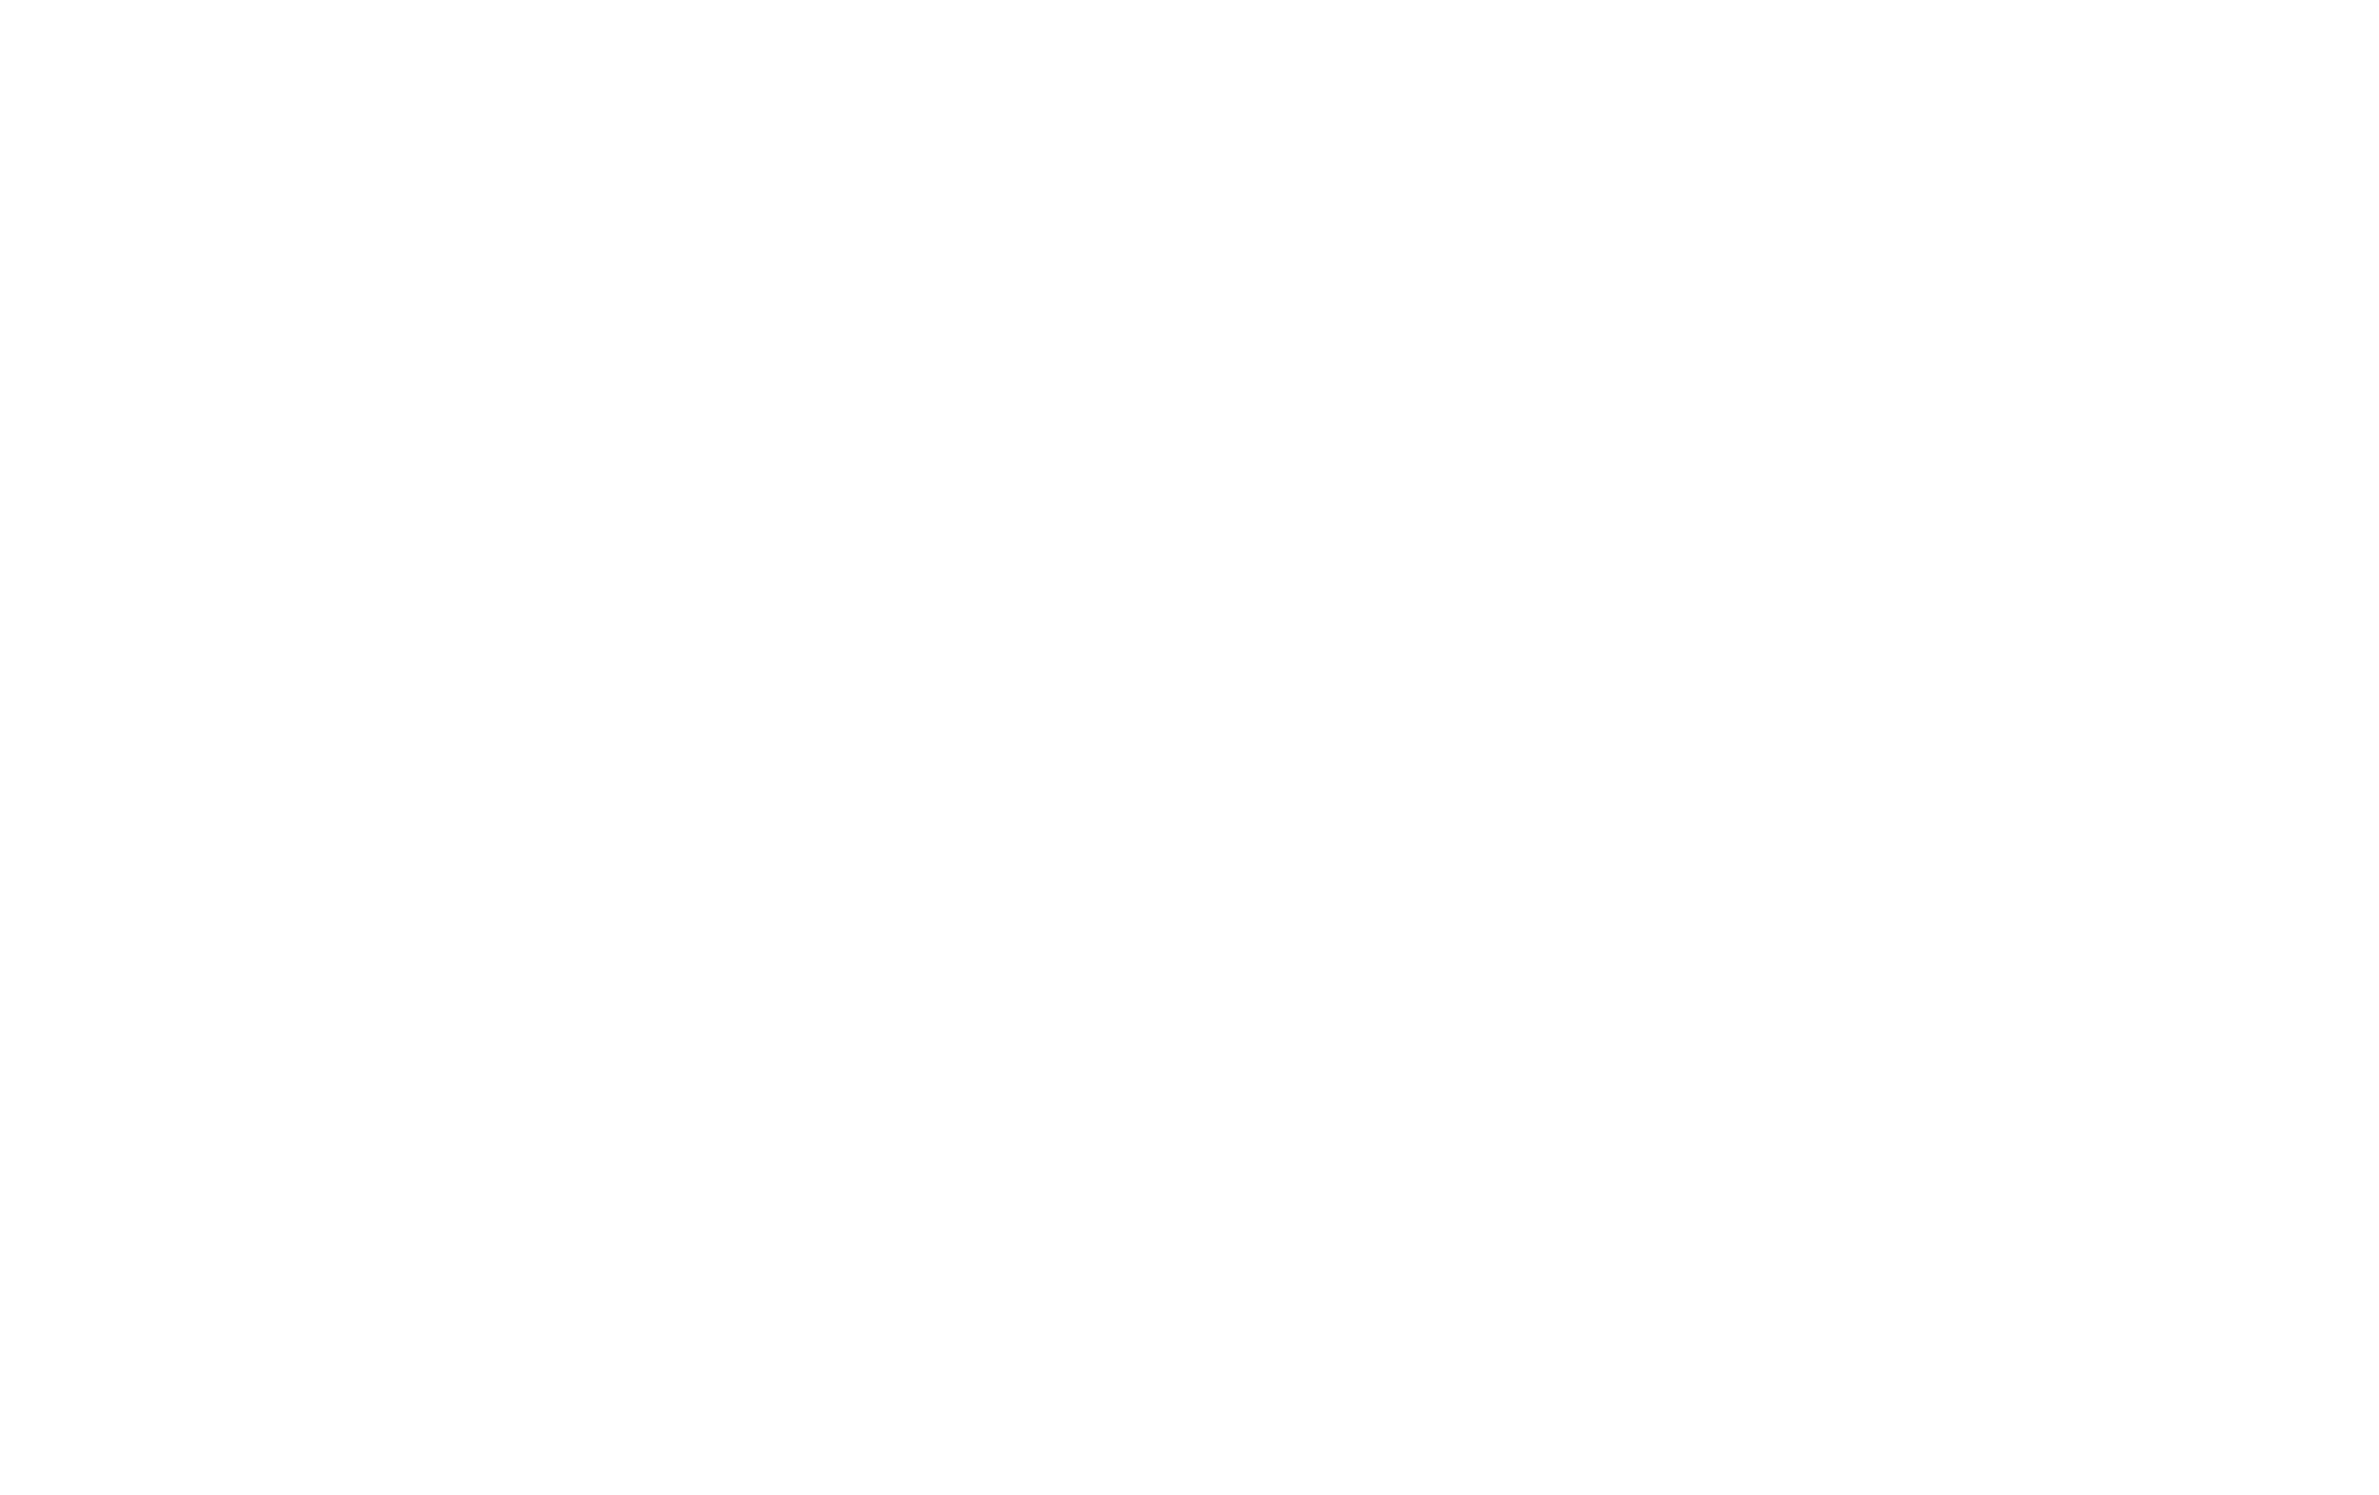 StoryCorps Logo